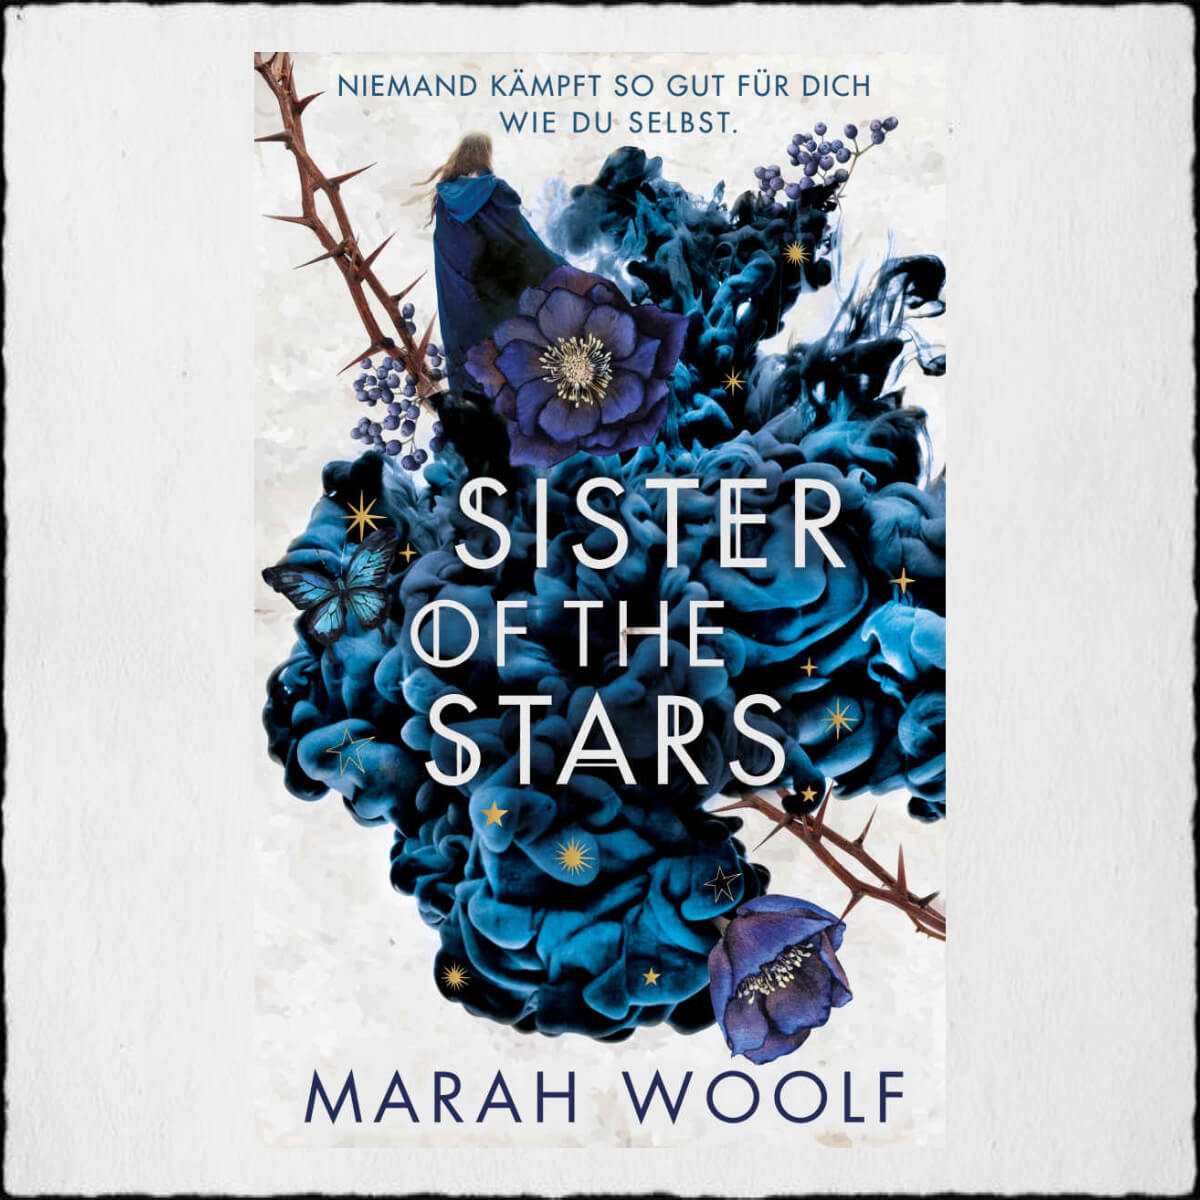 Marah Woolf "Sister of the Stars - HexenSchwesternSaga 1" © 2020 Marah Woolf in Selbstpublikation